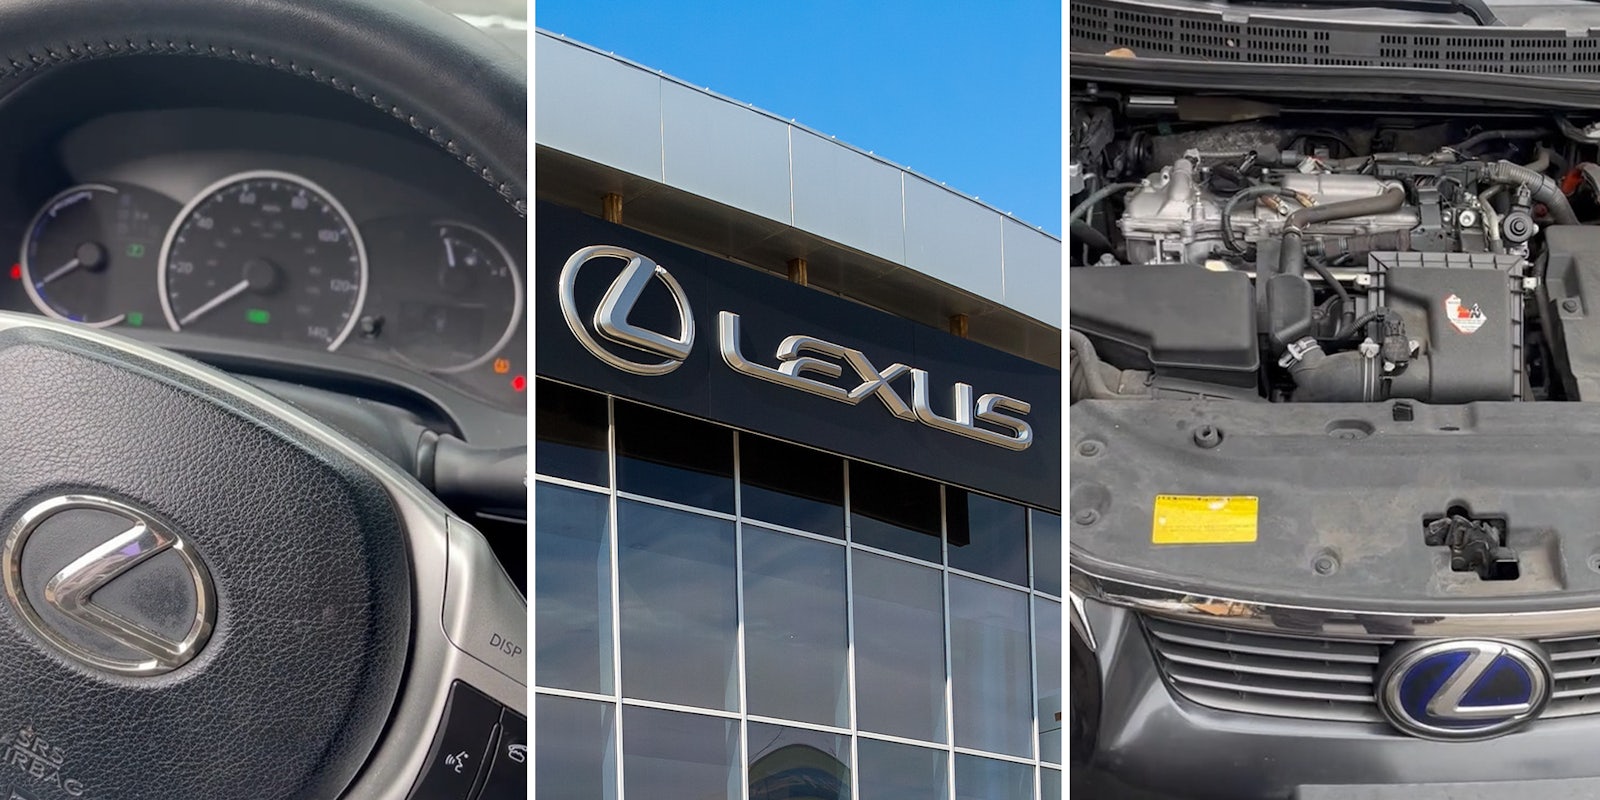 Lexus emblem from steering wheel; lexus logo on dealership; lexus vehicle engine